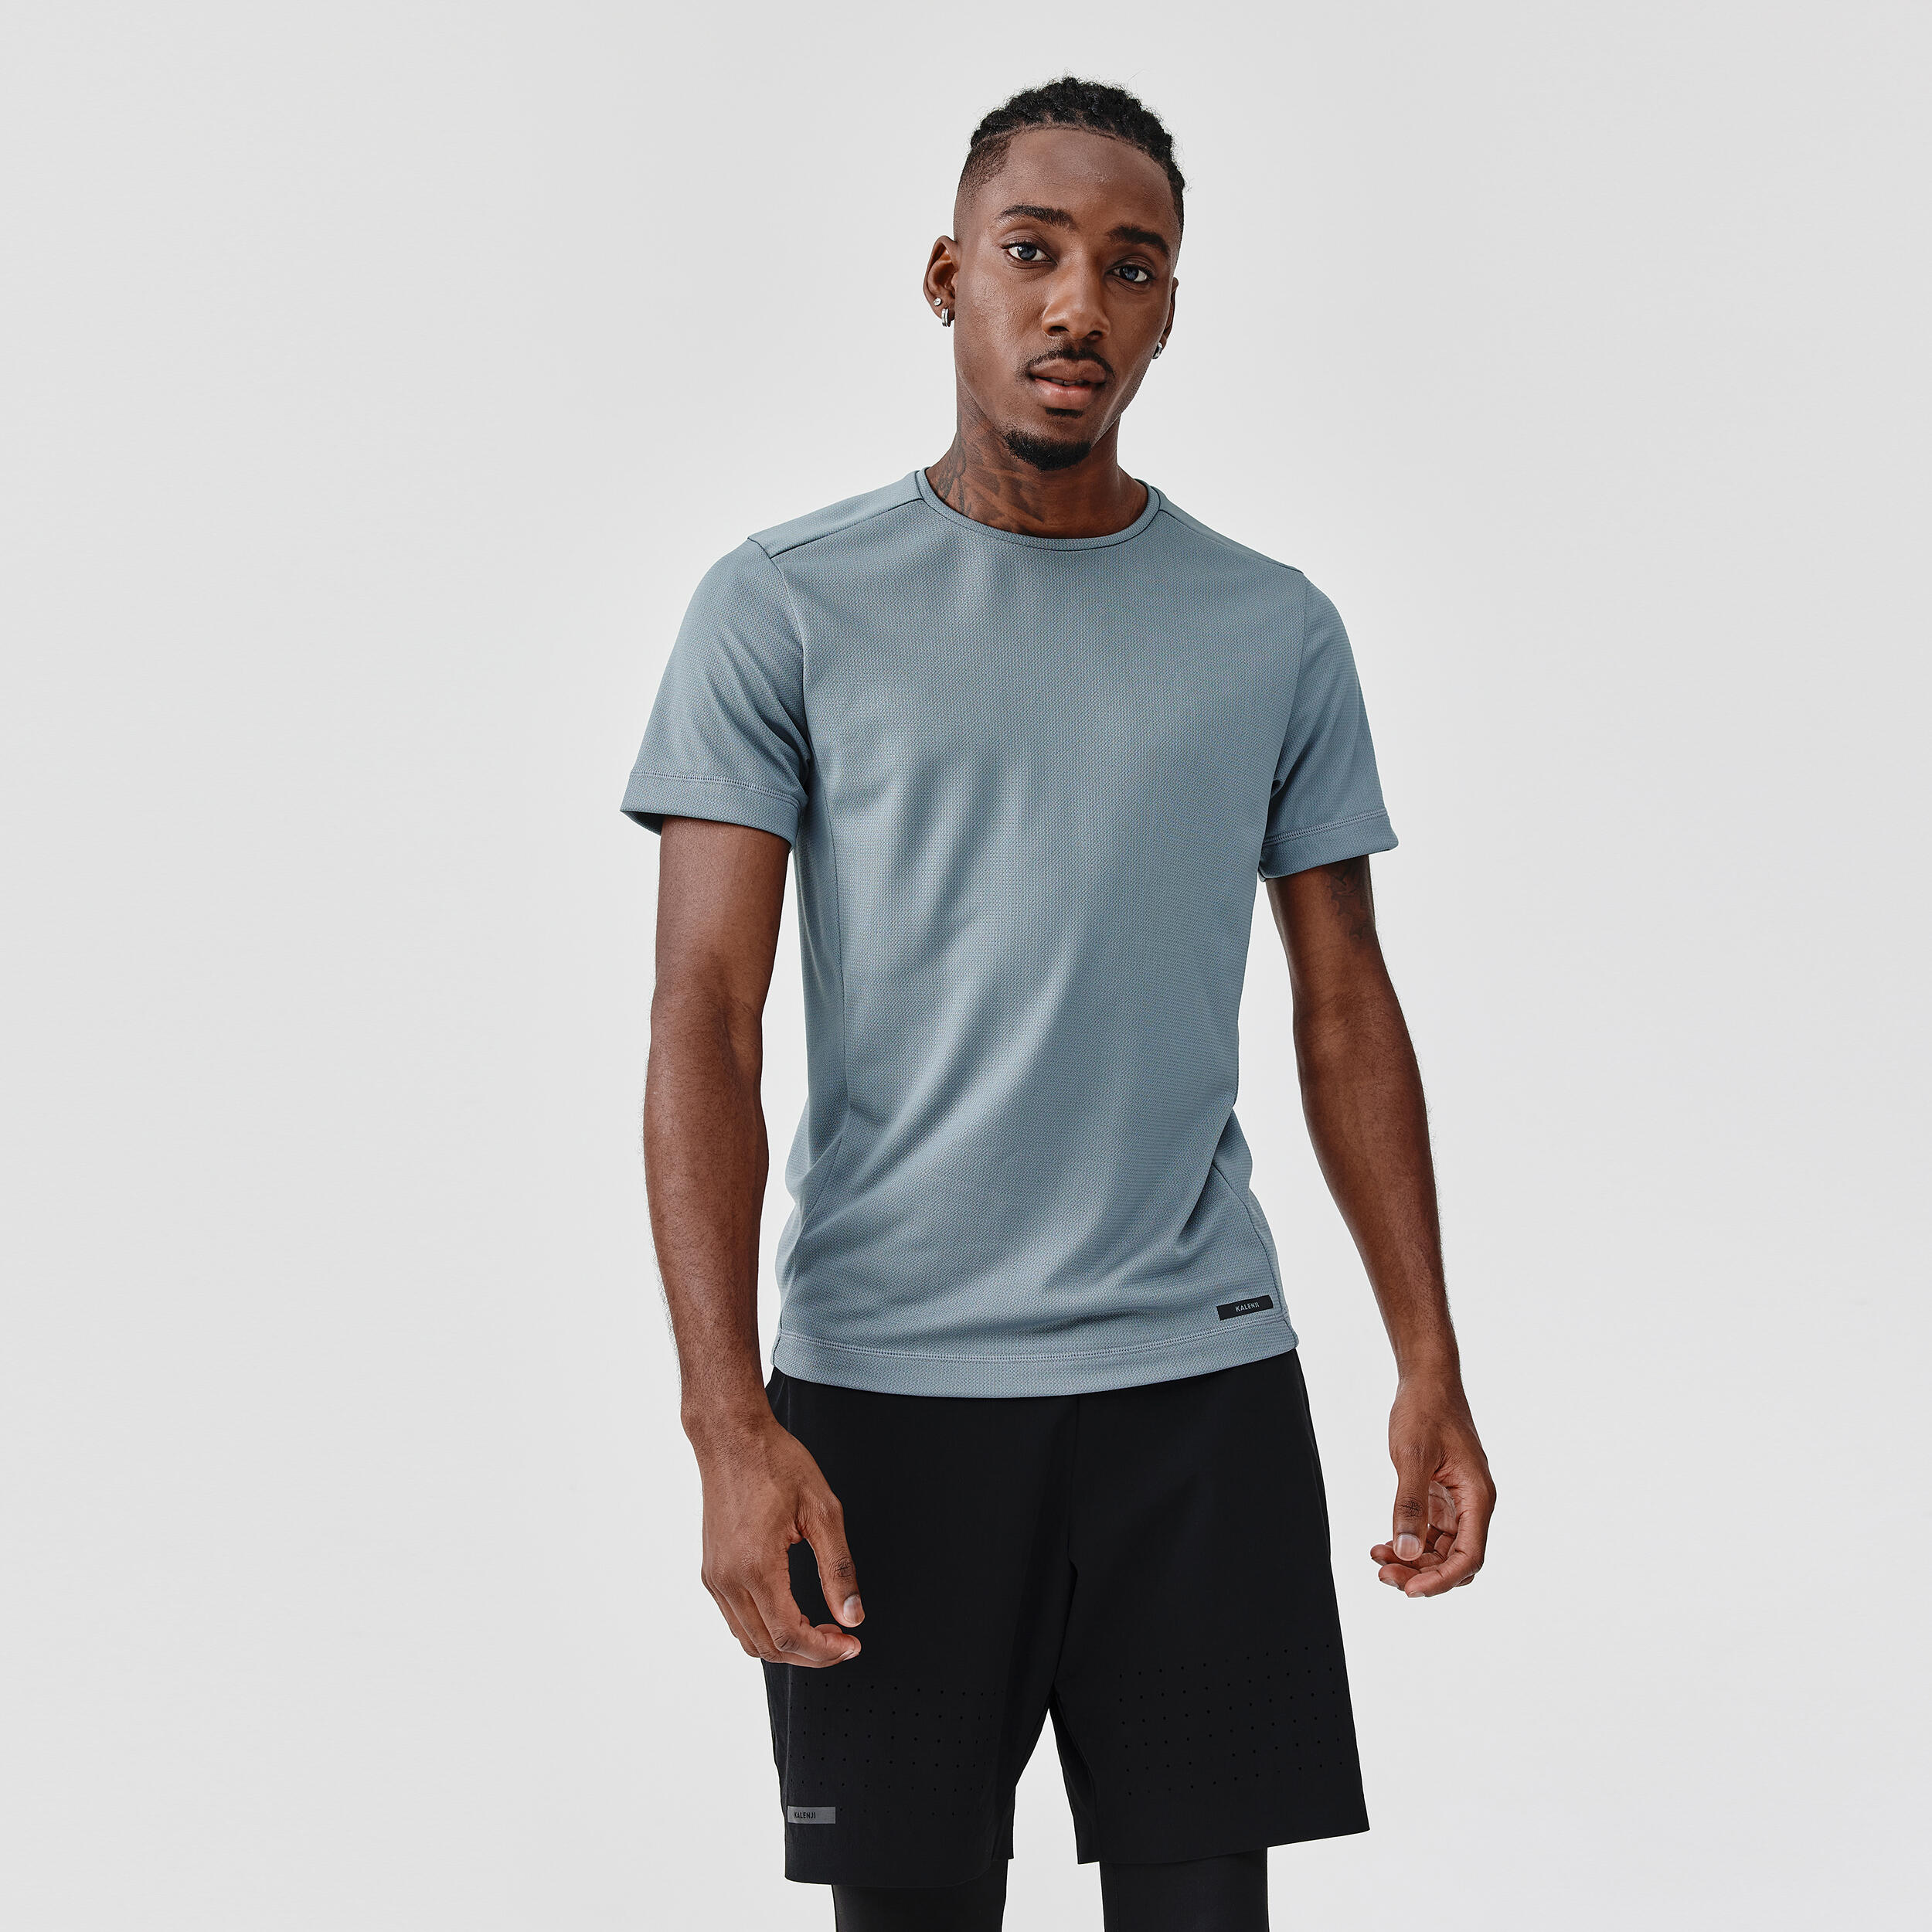 Buy Run Dry Men's Running T-Shirt - Grey Online | Decathlon